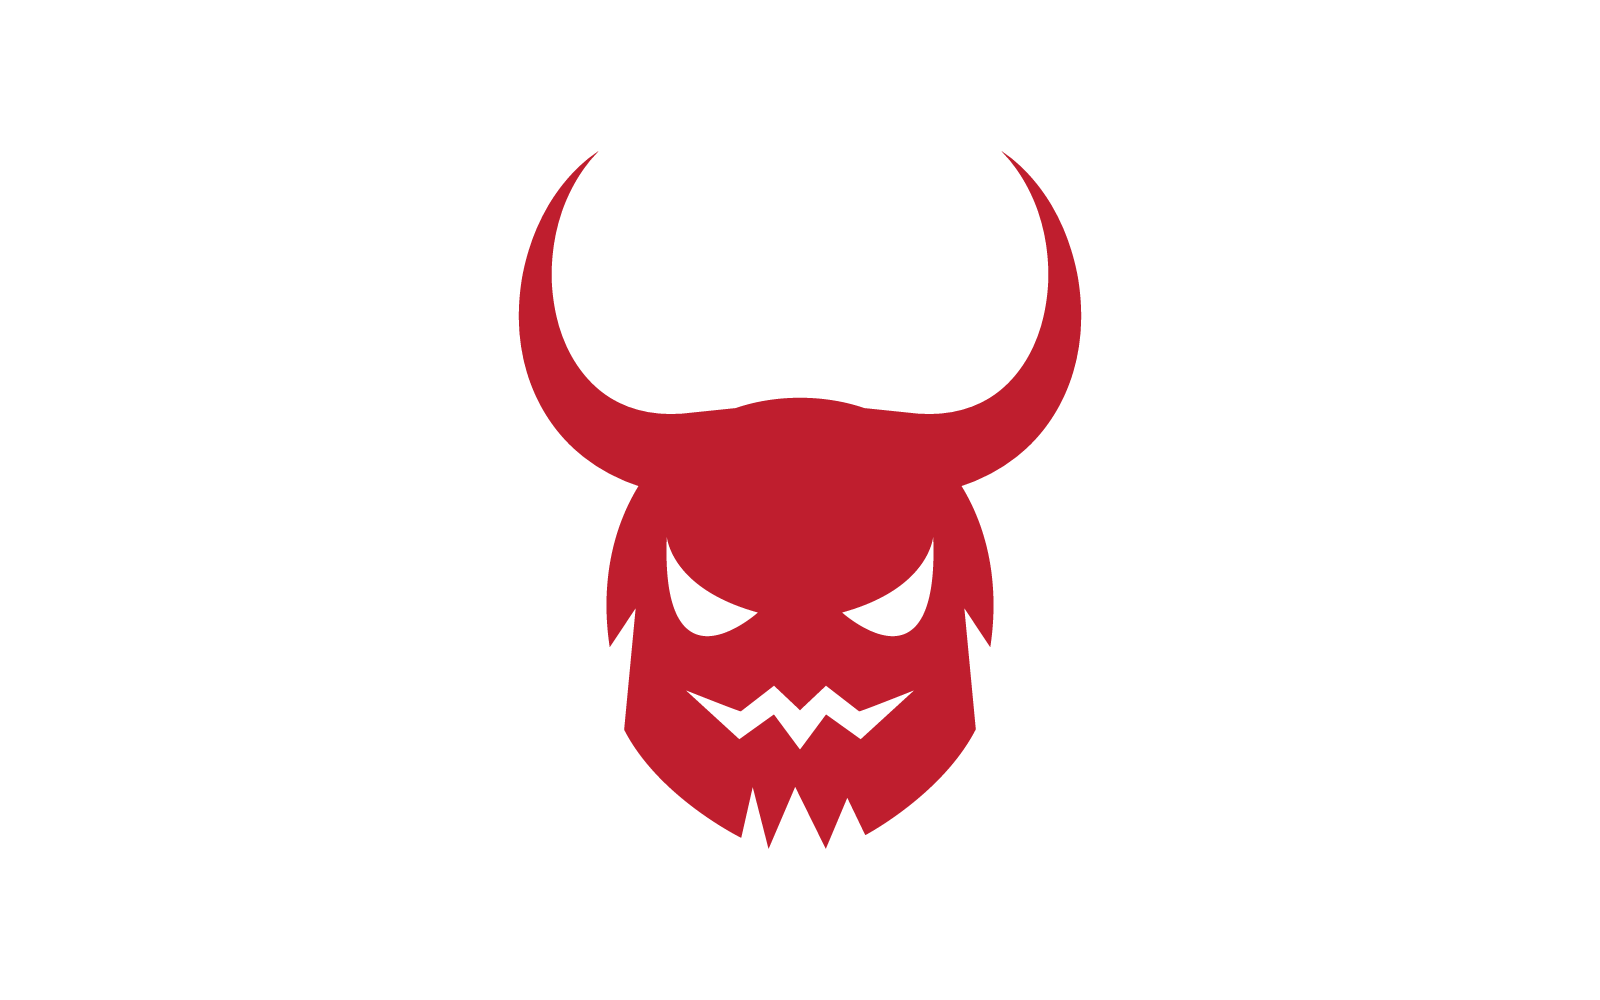 Szablon projektu wektor logo diabła